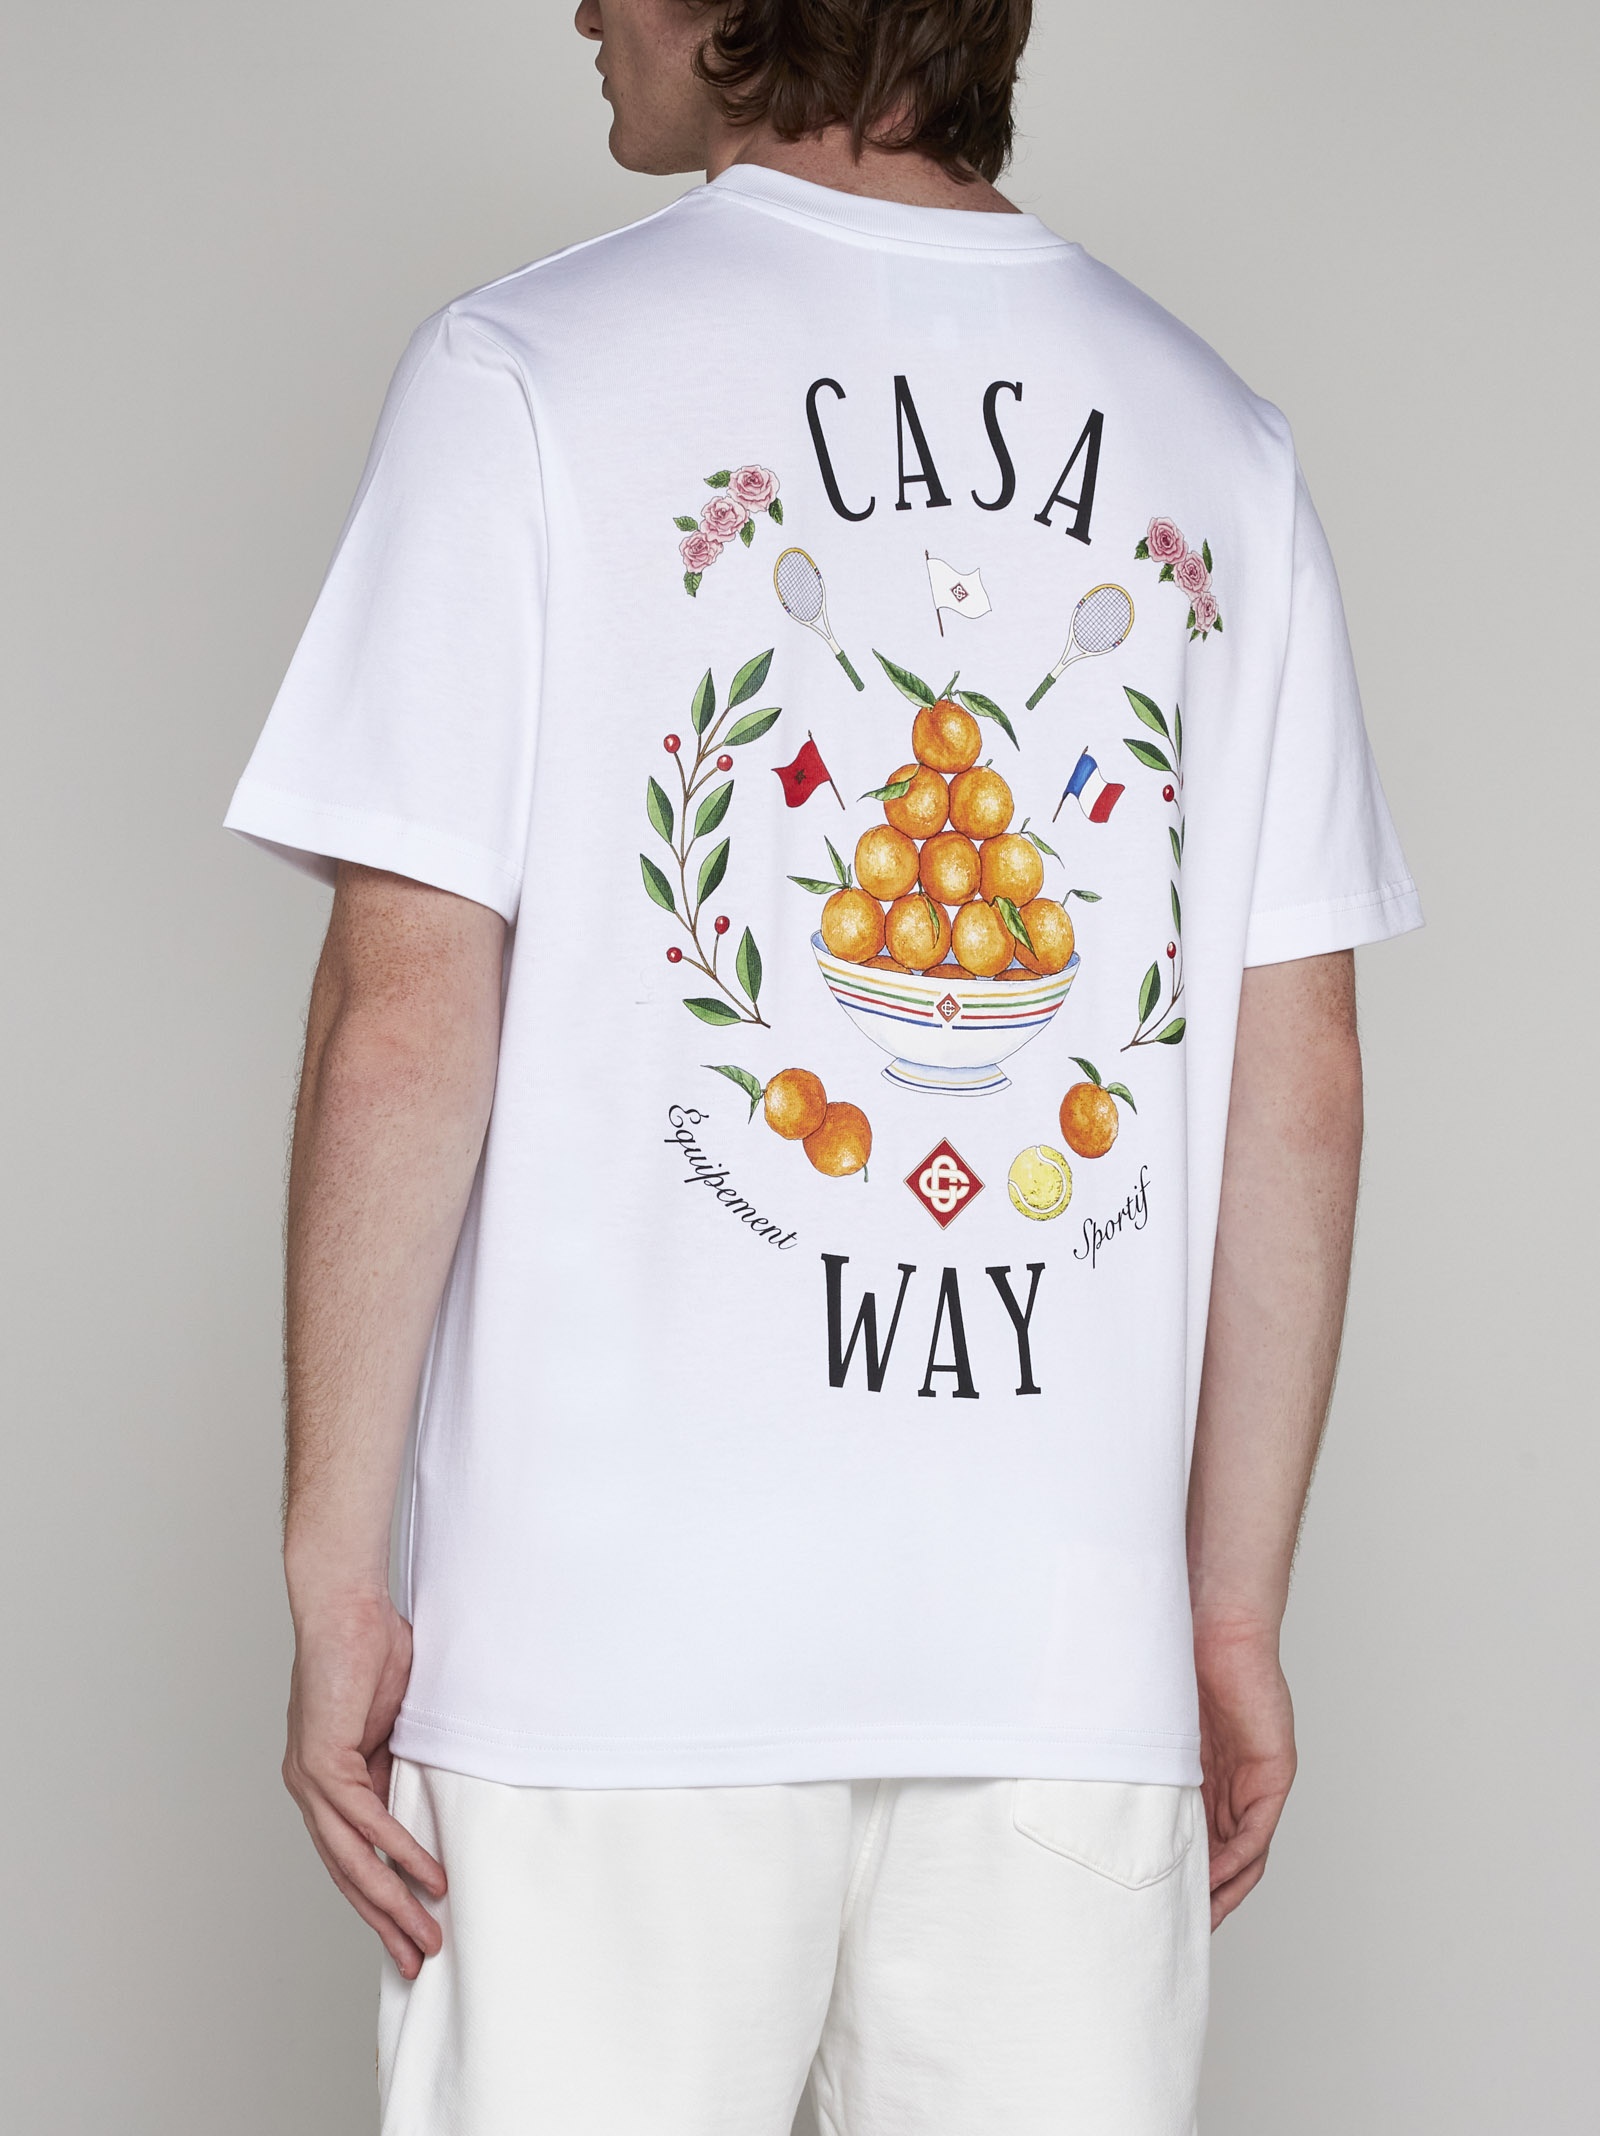 Casa Way cotton t-shirt - 4